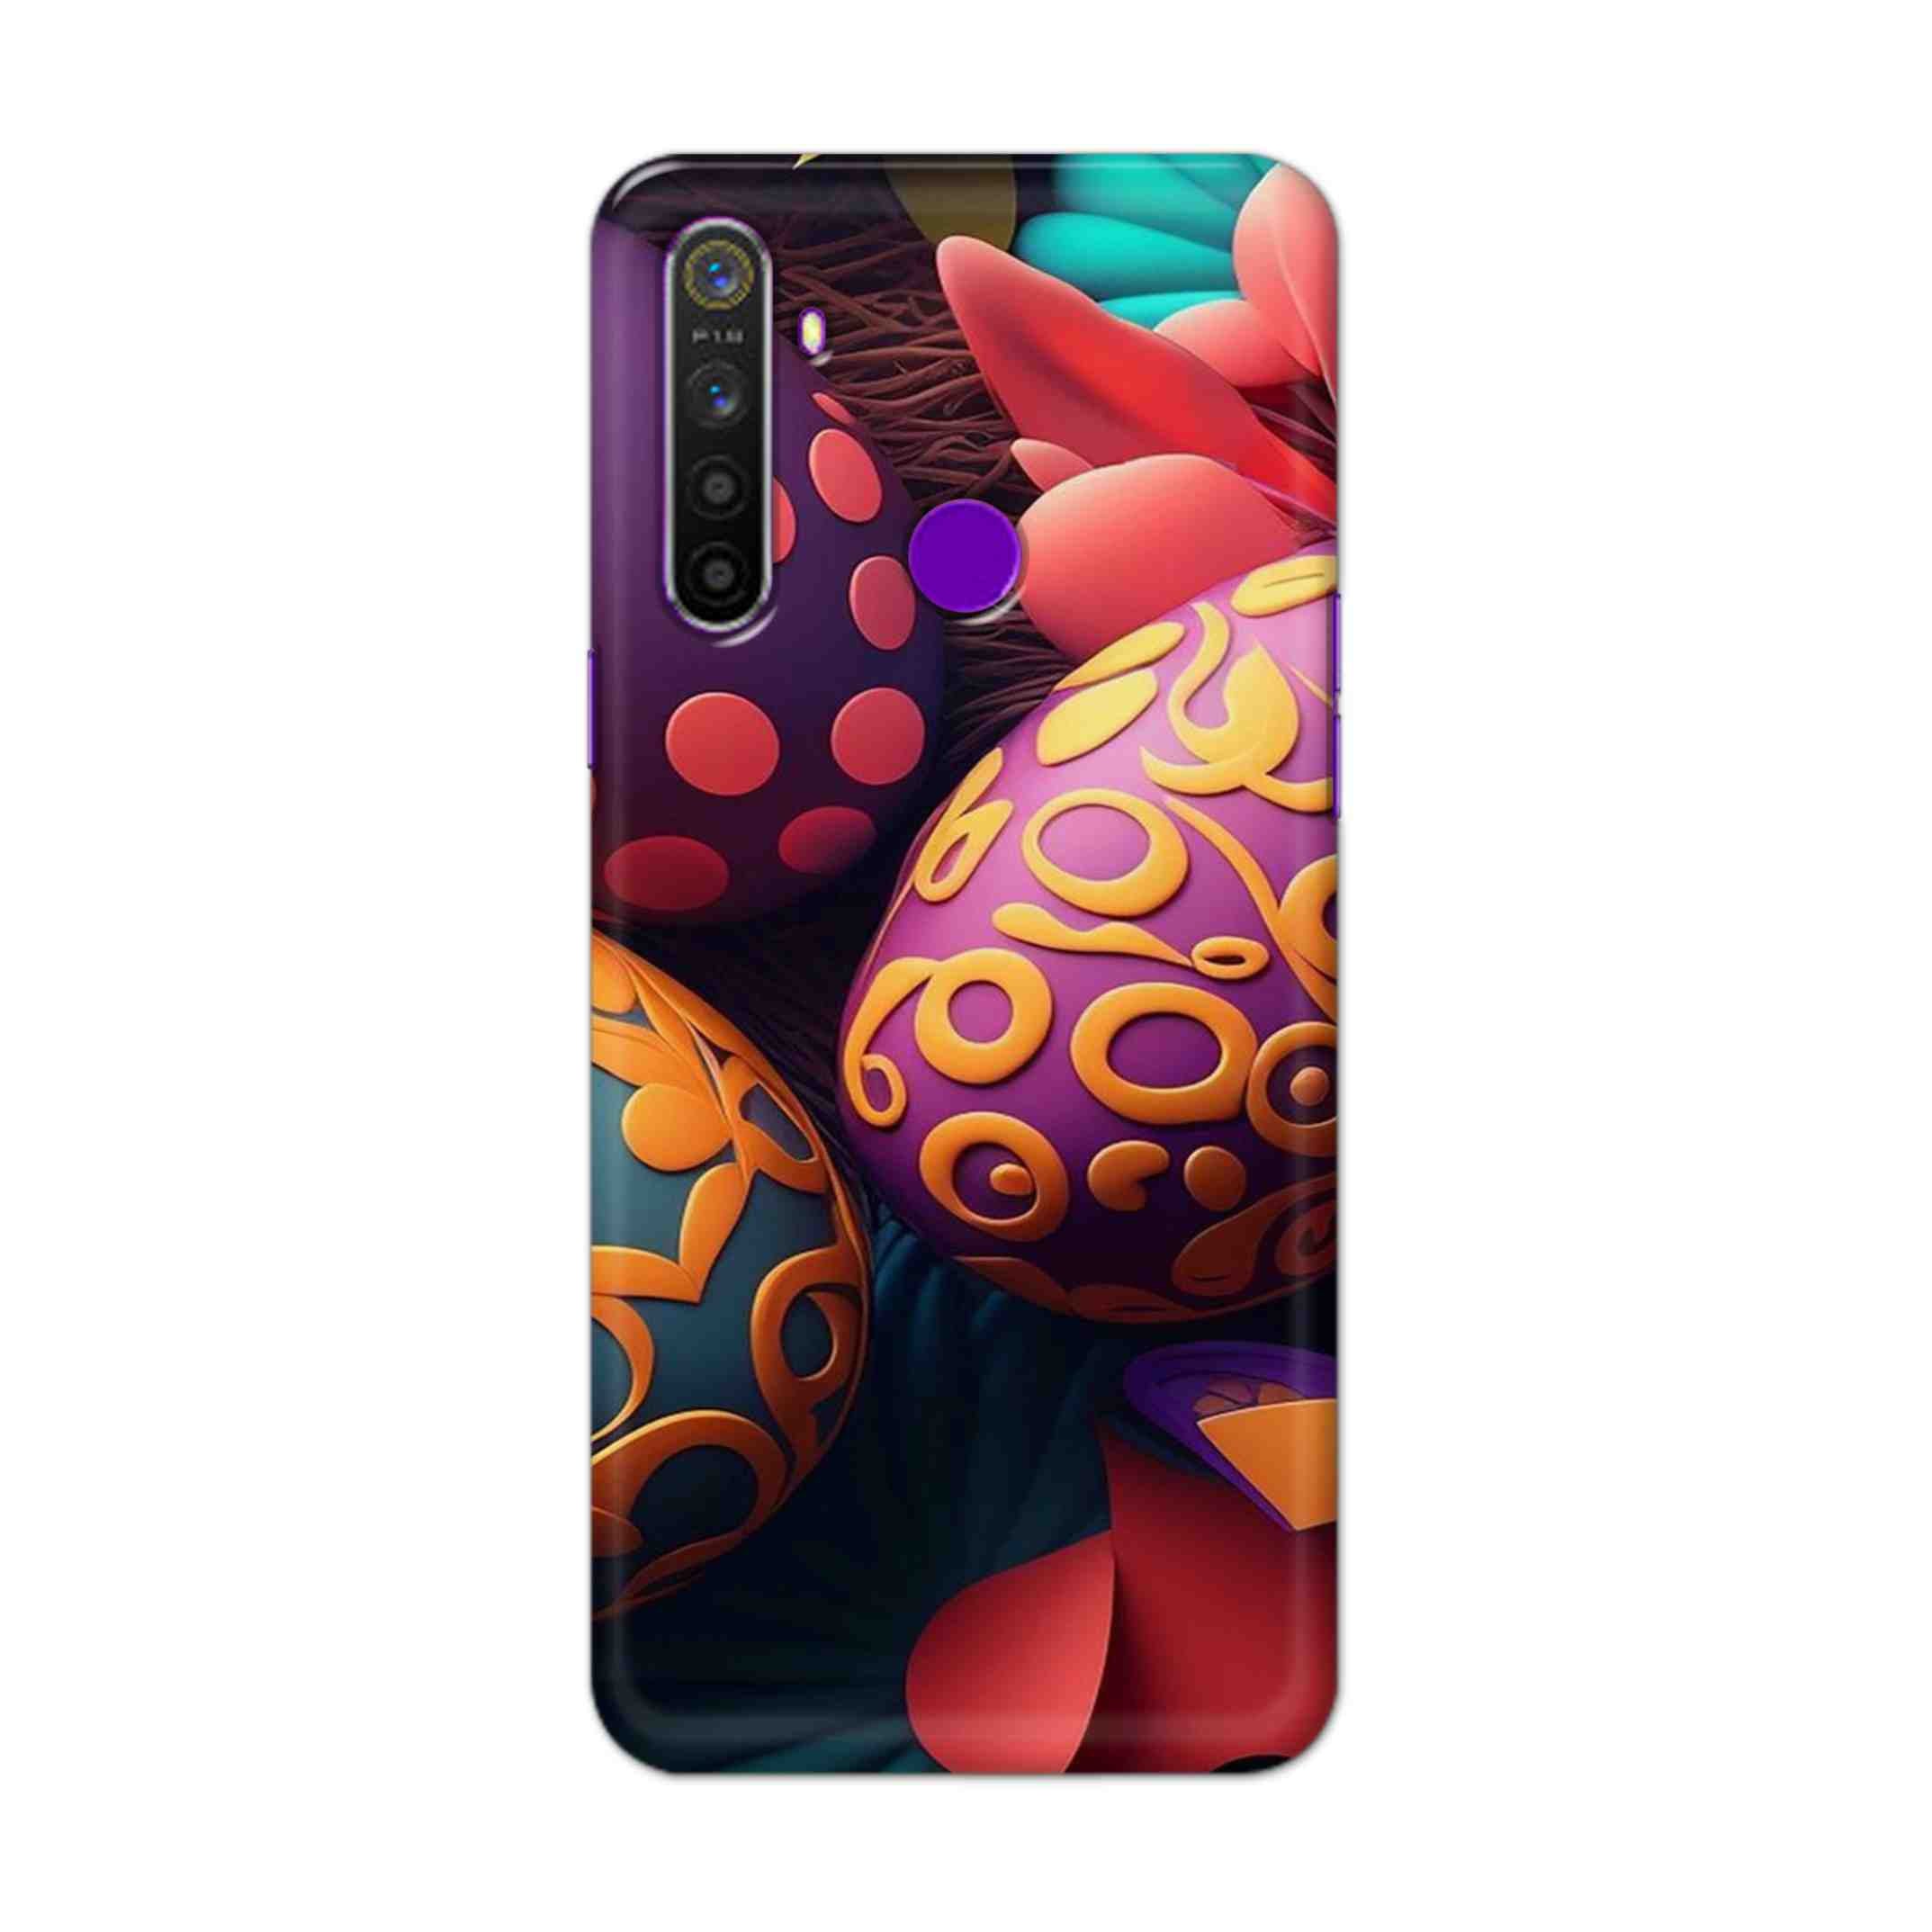 Buy Easter Egg Hard Back Mobile Phone Case Cover For Realme 5 Online